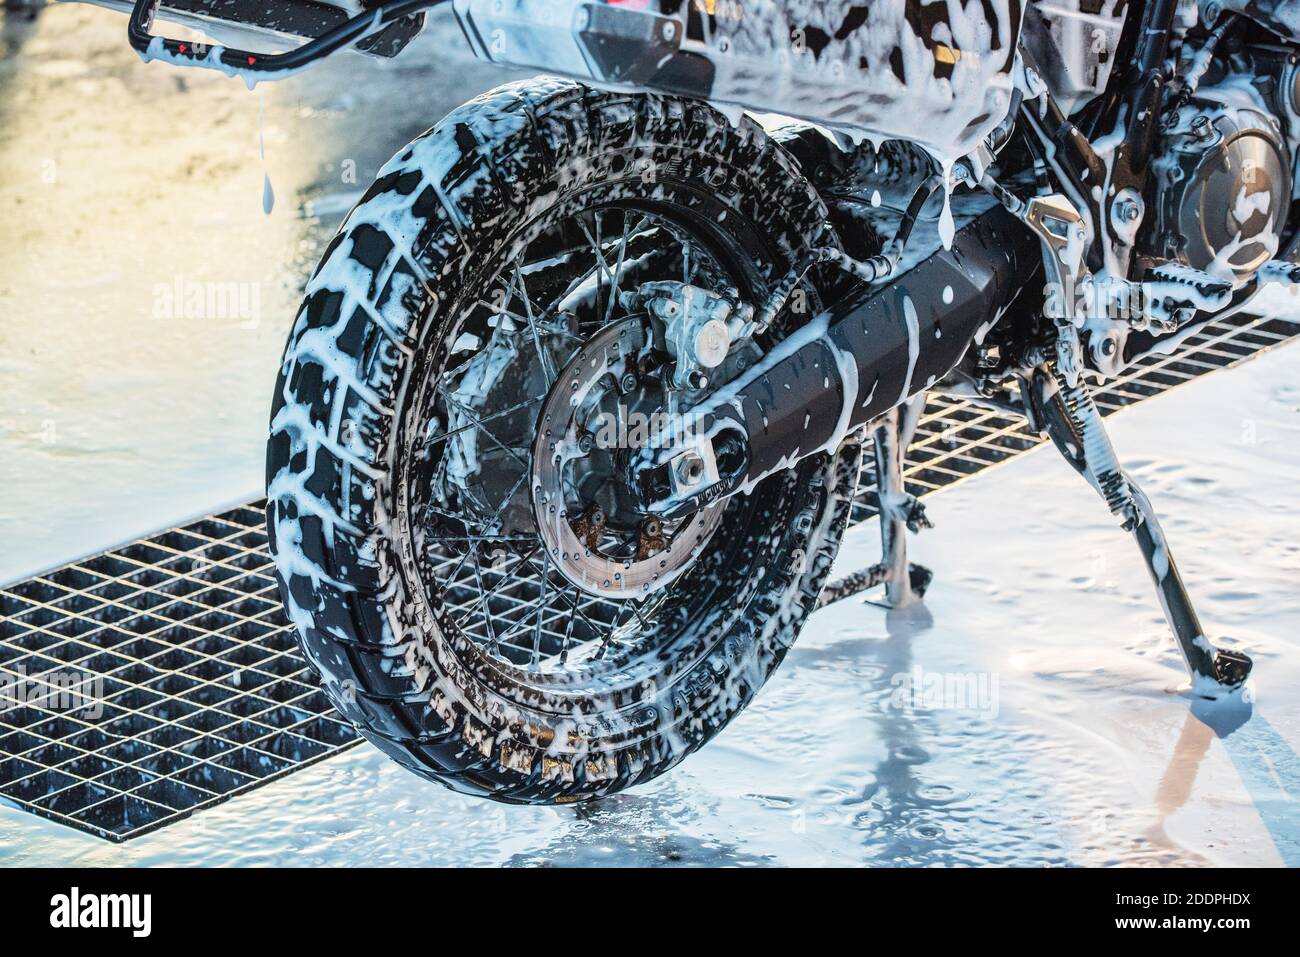 Motorbike washing series. Motorcycle wash Stock Photo - Alamy